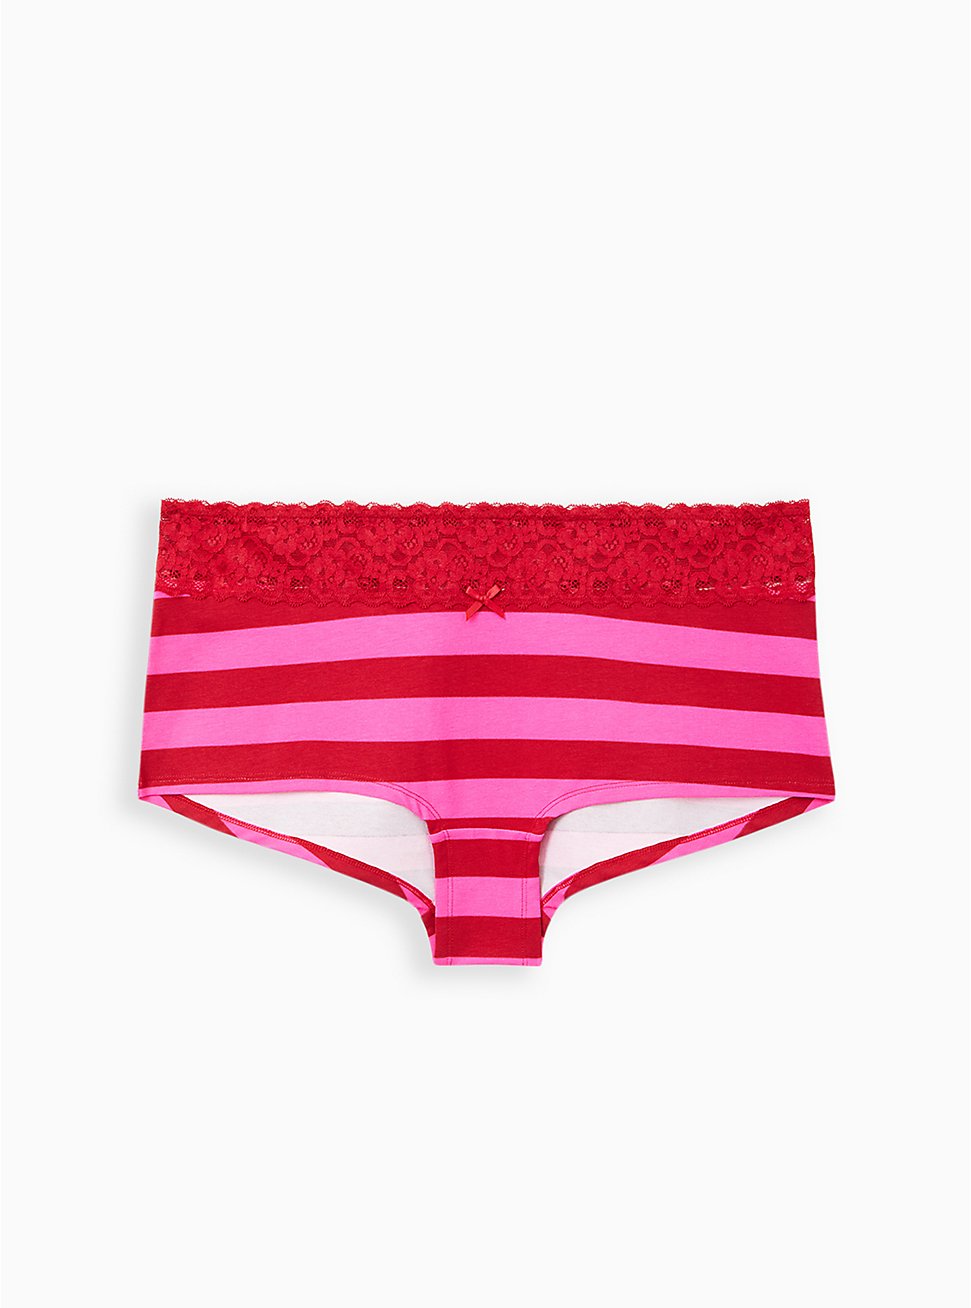 Wide Lace Trim Boyshort Panty - Cotton Stripe Red & Pink, VICTORIA STRIPE- RED, hi-res